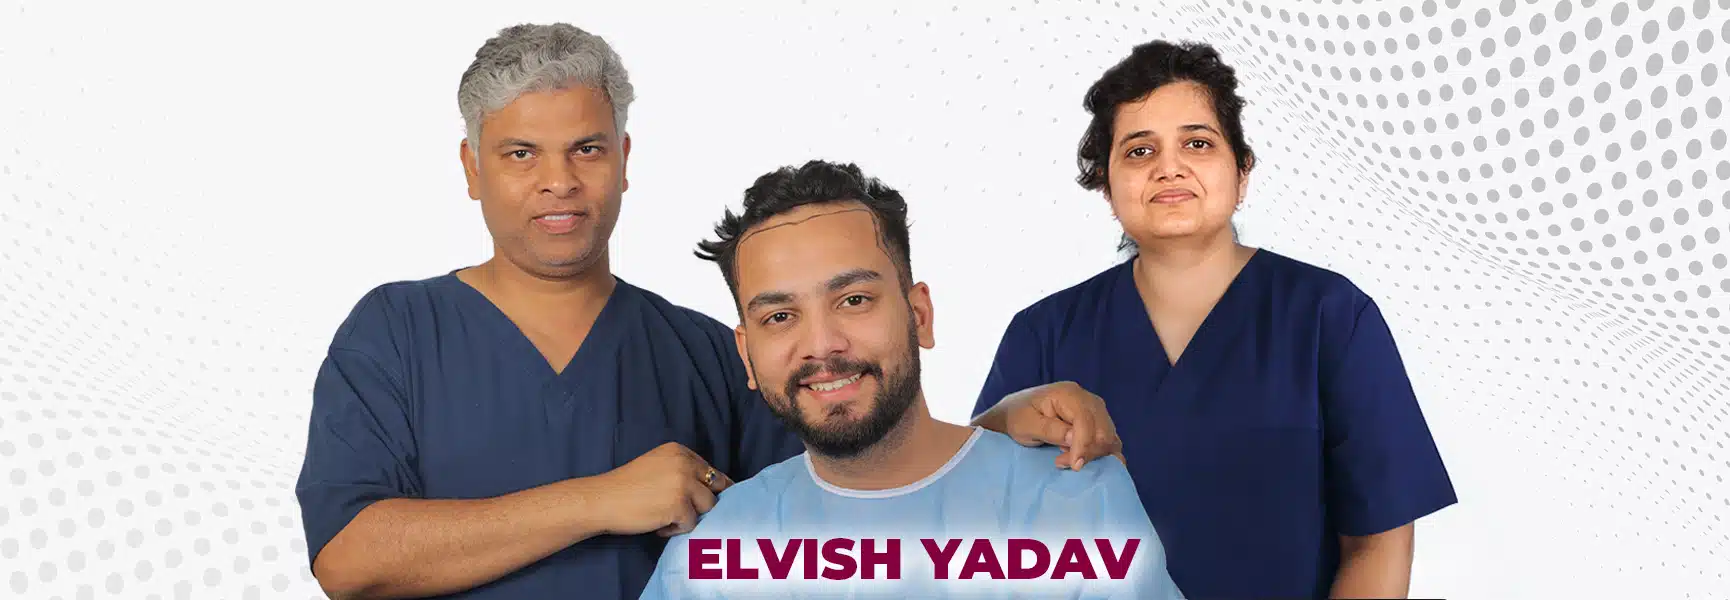 Celebrity Hair Transplant: Singer Elvish Yadav’s Hair Restoration Journey